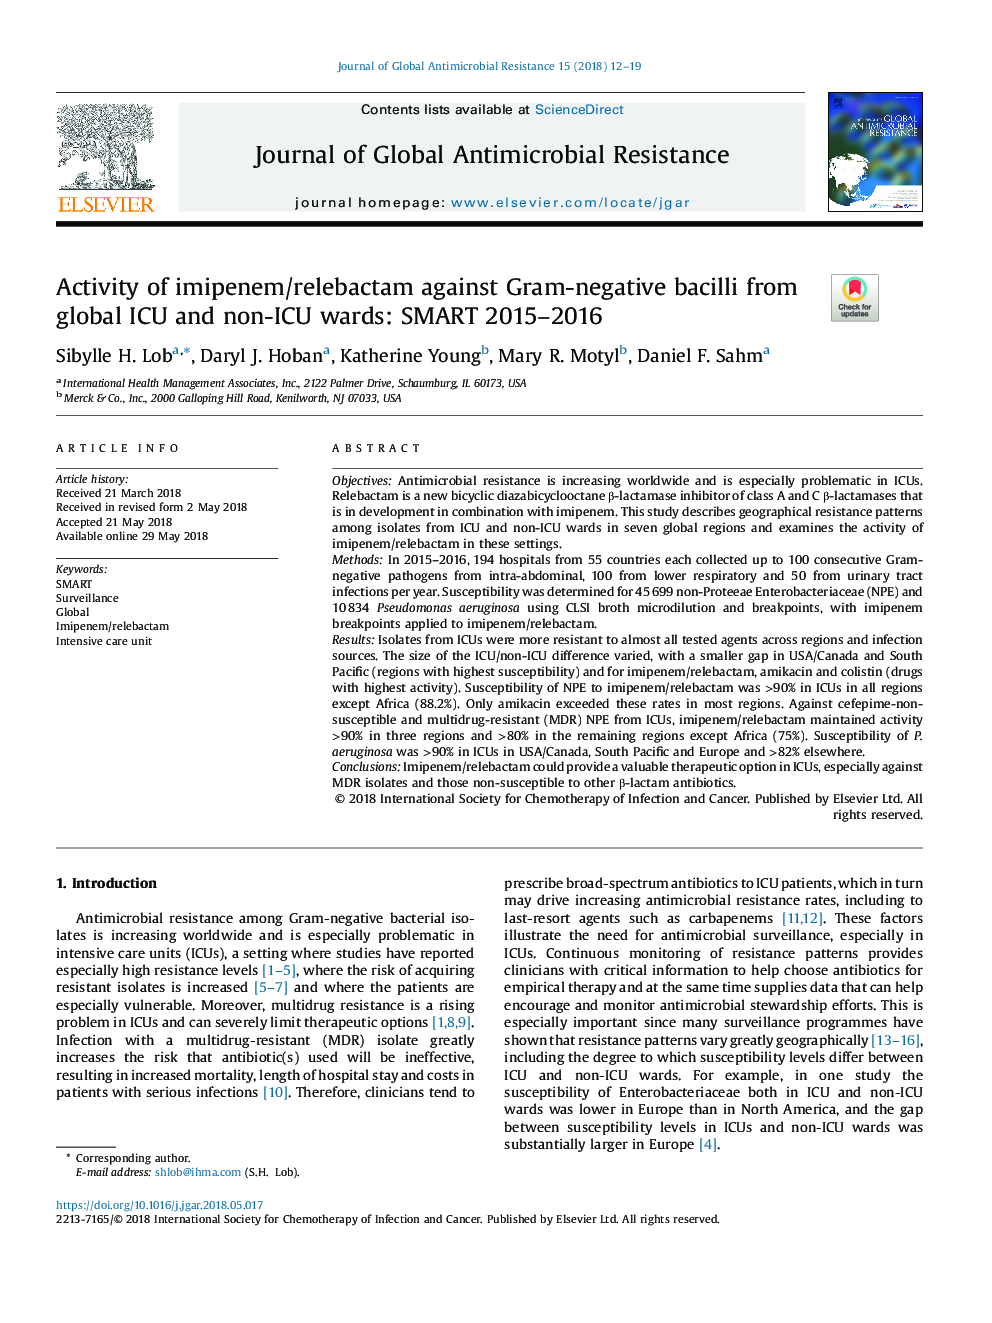 Activity of imipenem/relebactam against Gram-negative bacilli from global ICU and non-ICU wards: SMART 2015-2016